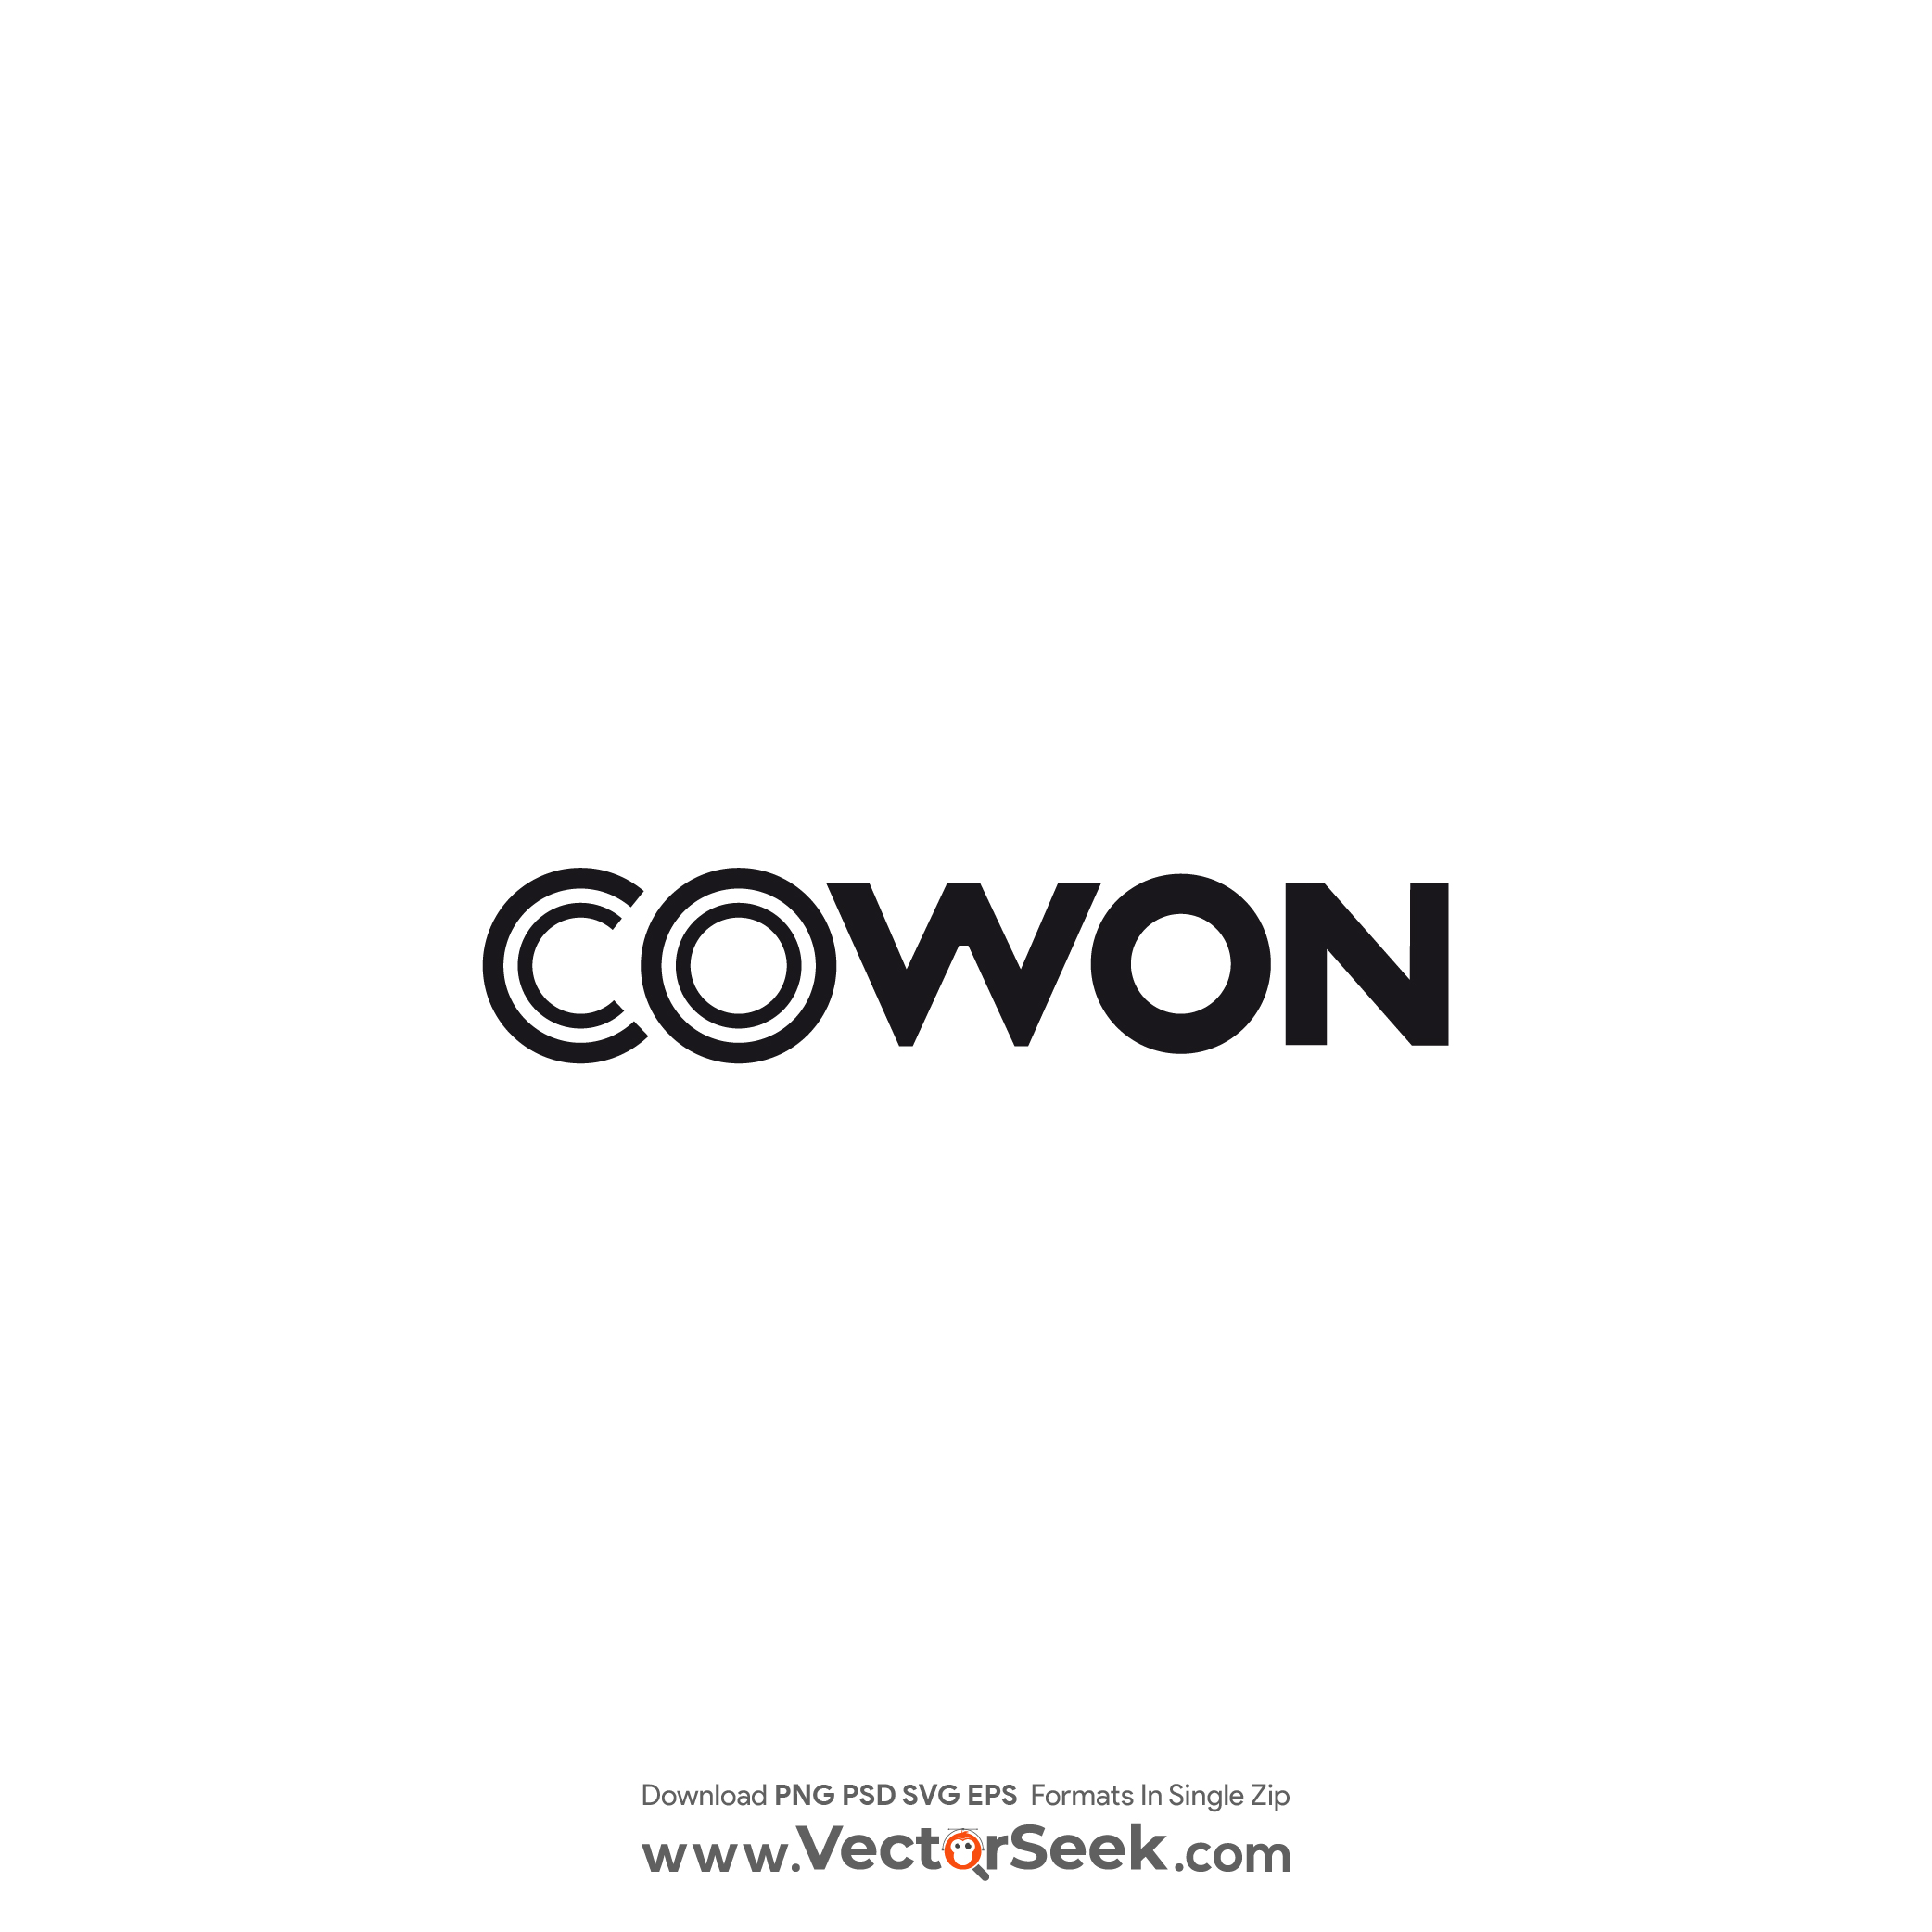 Cowon Logo Vector